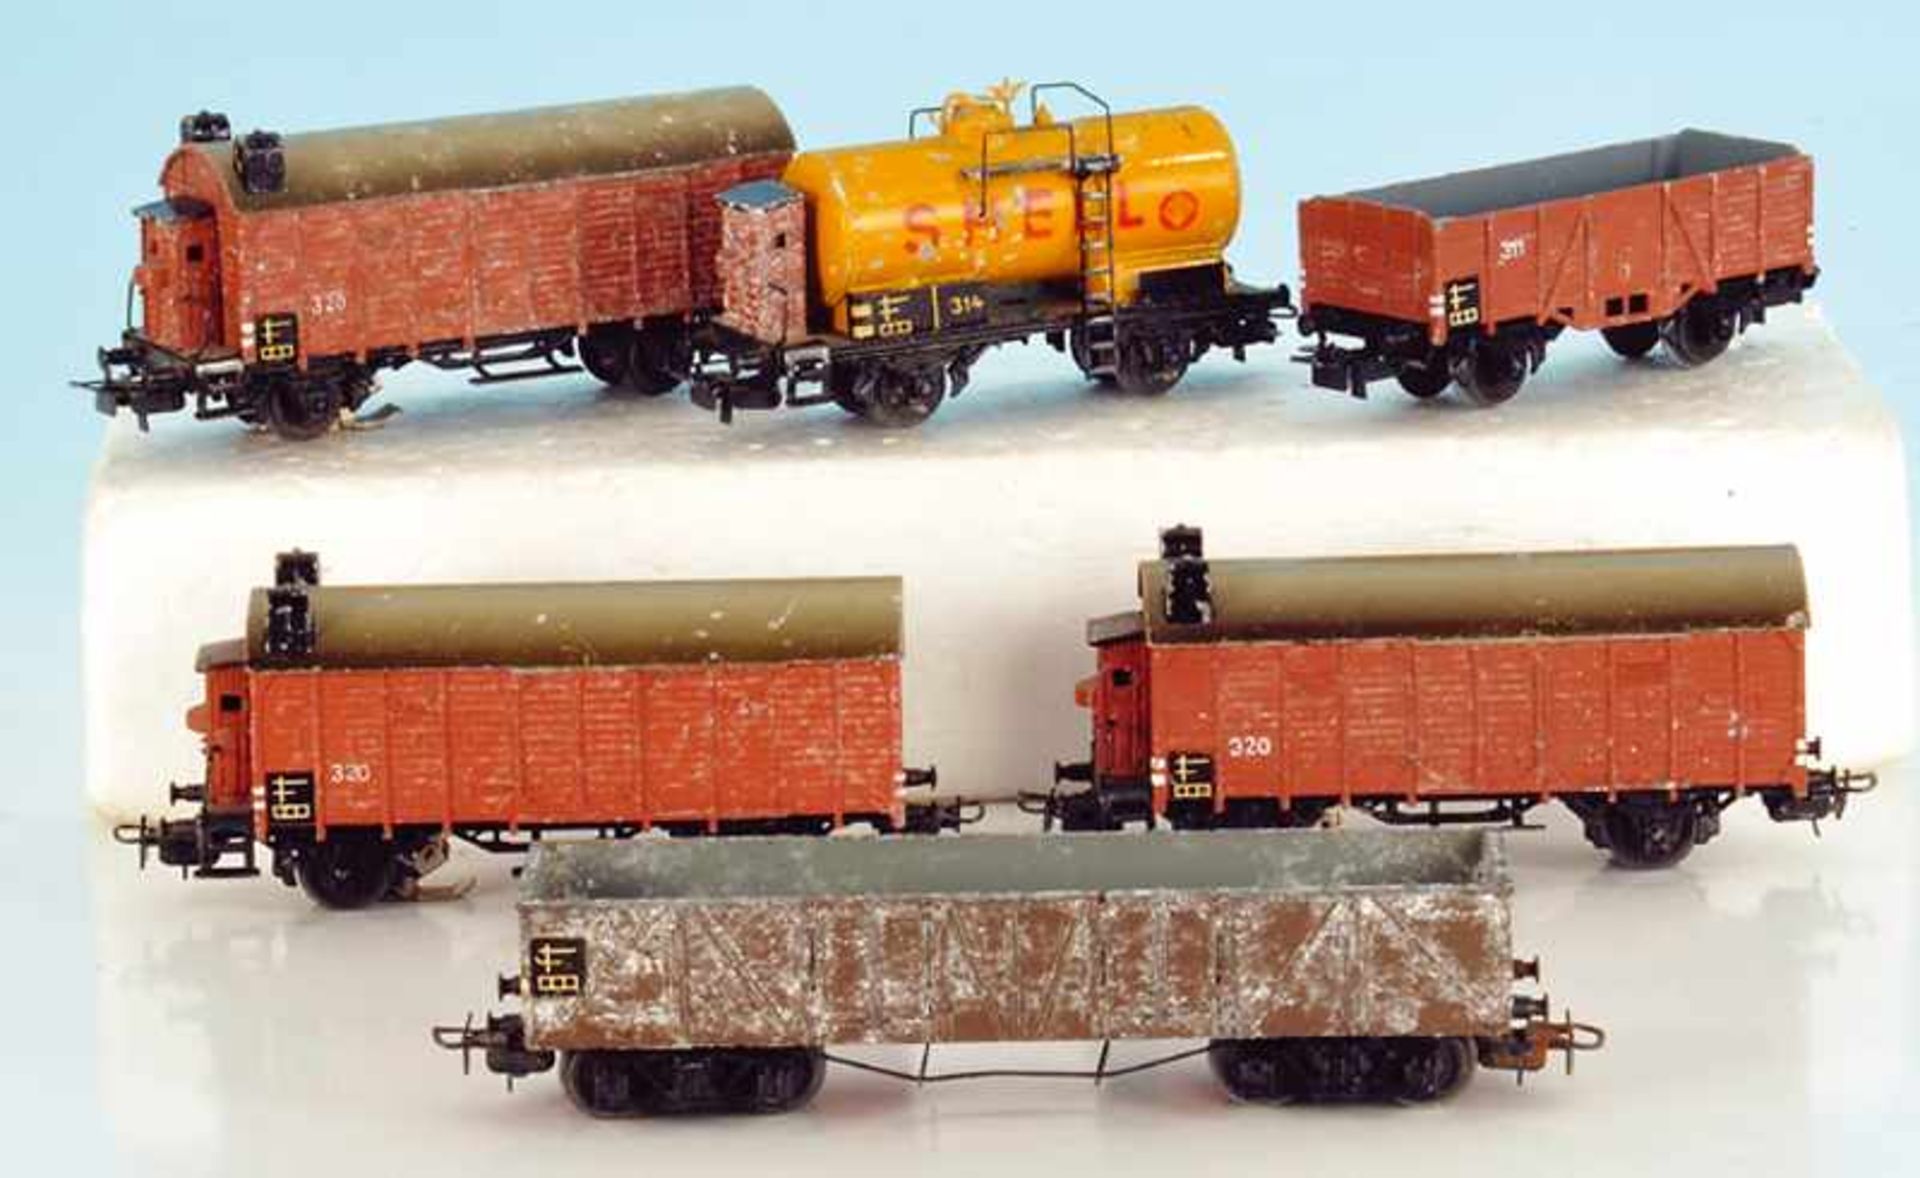 6 MÄRKLIN Guss-Güterwagen mit starken Ausblühungen, 3 x 320 S, 1 x 314 "SHELL", 1 x 331, 1 x 311,